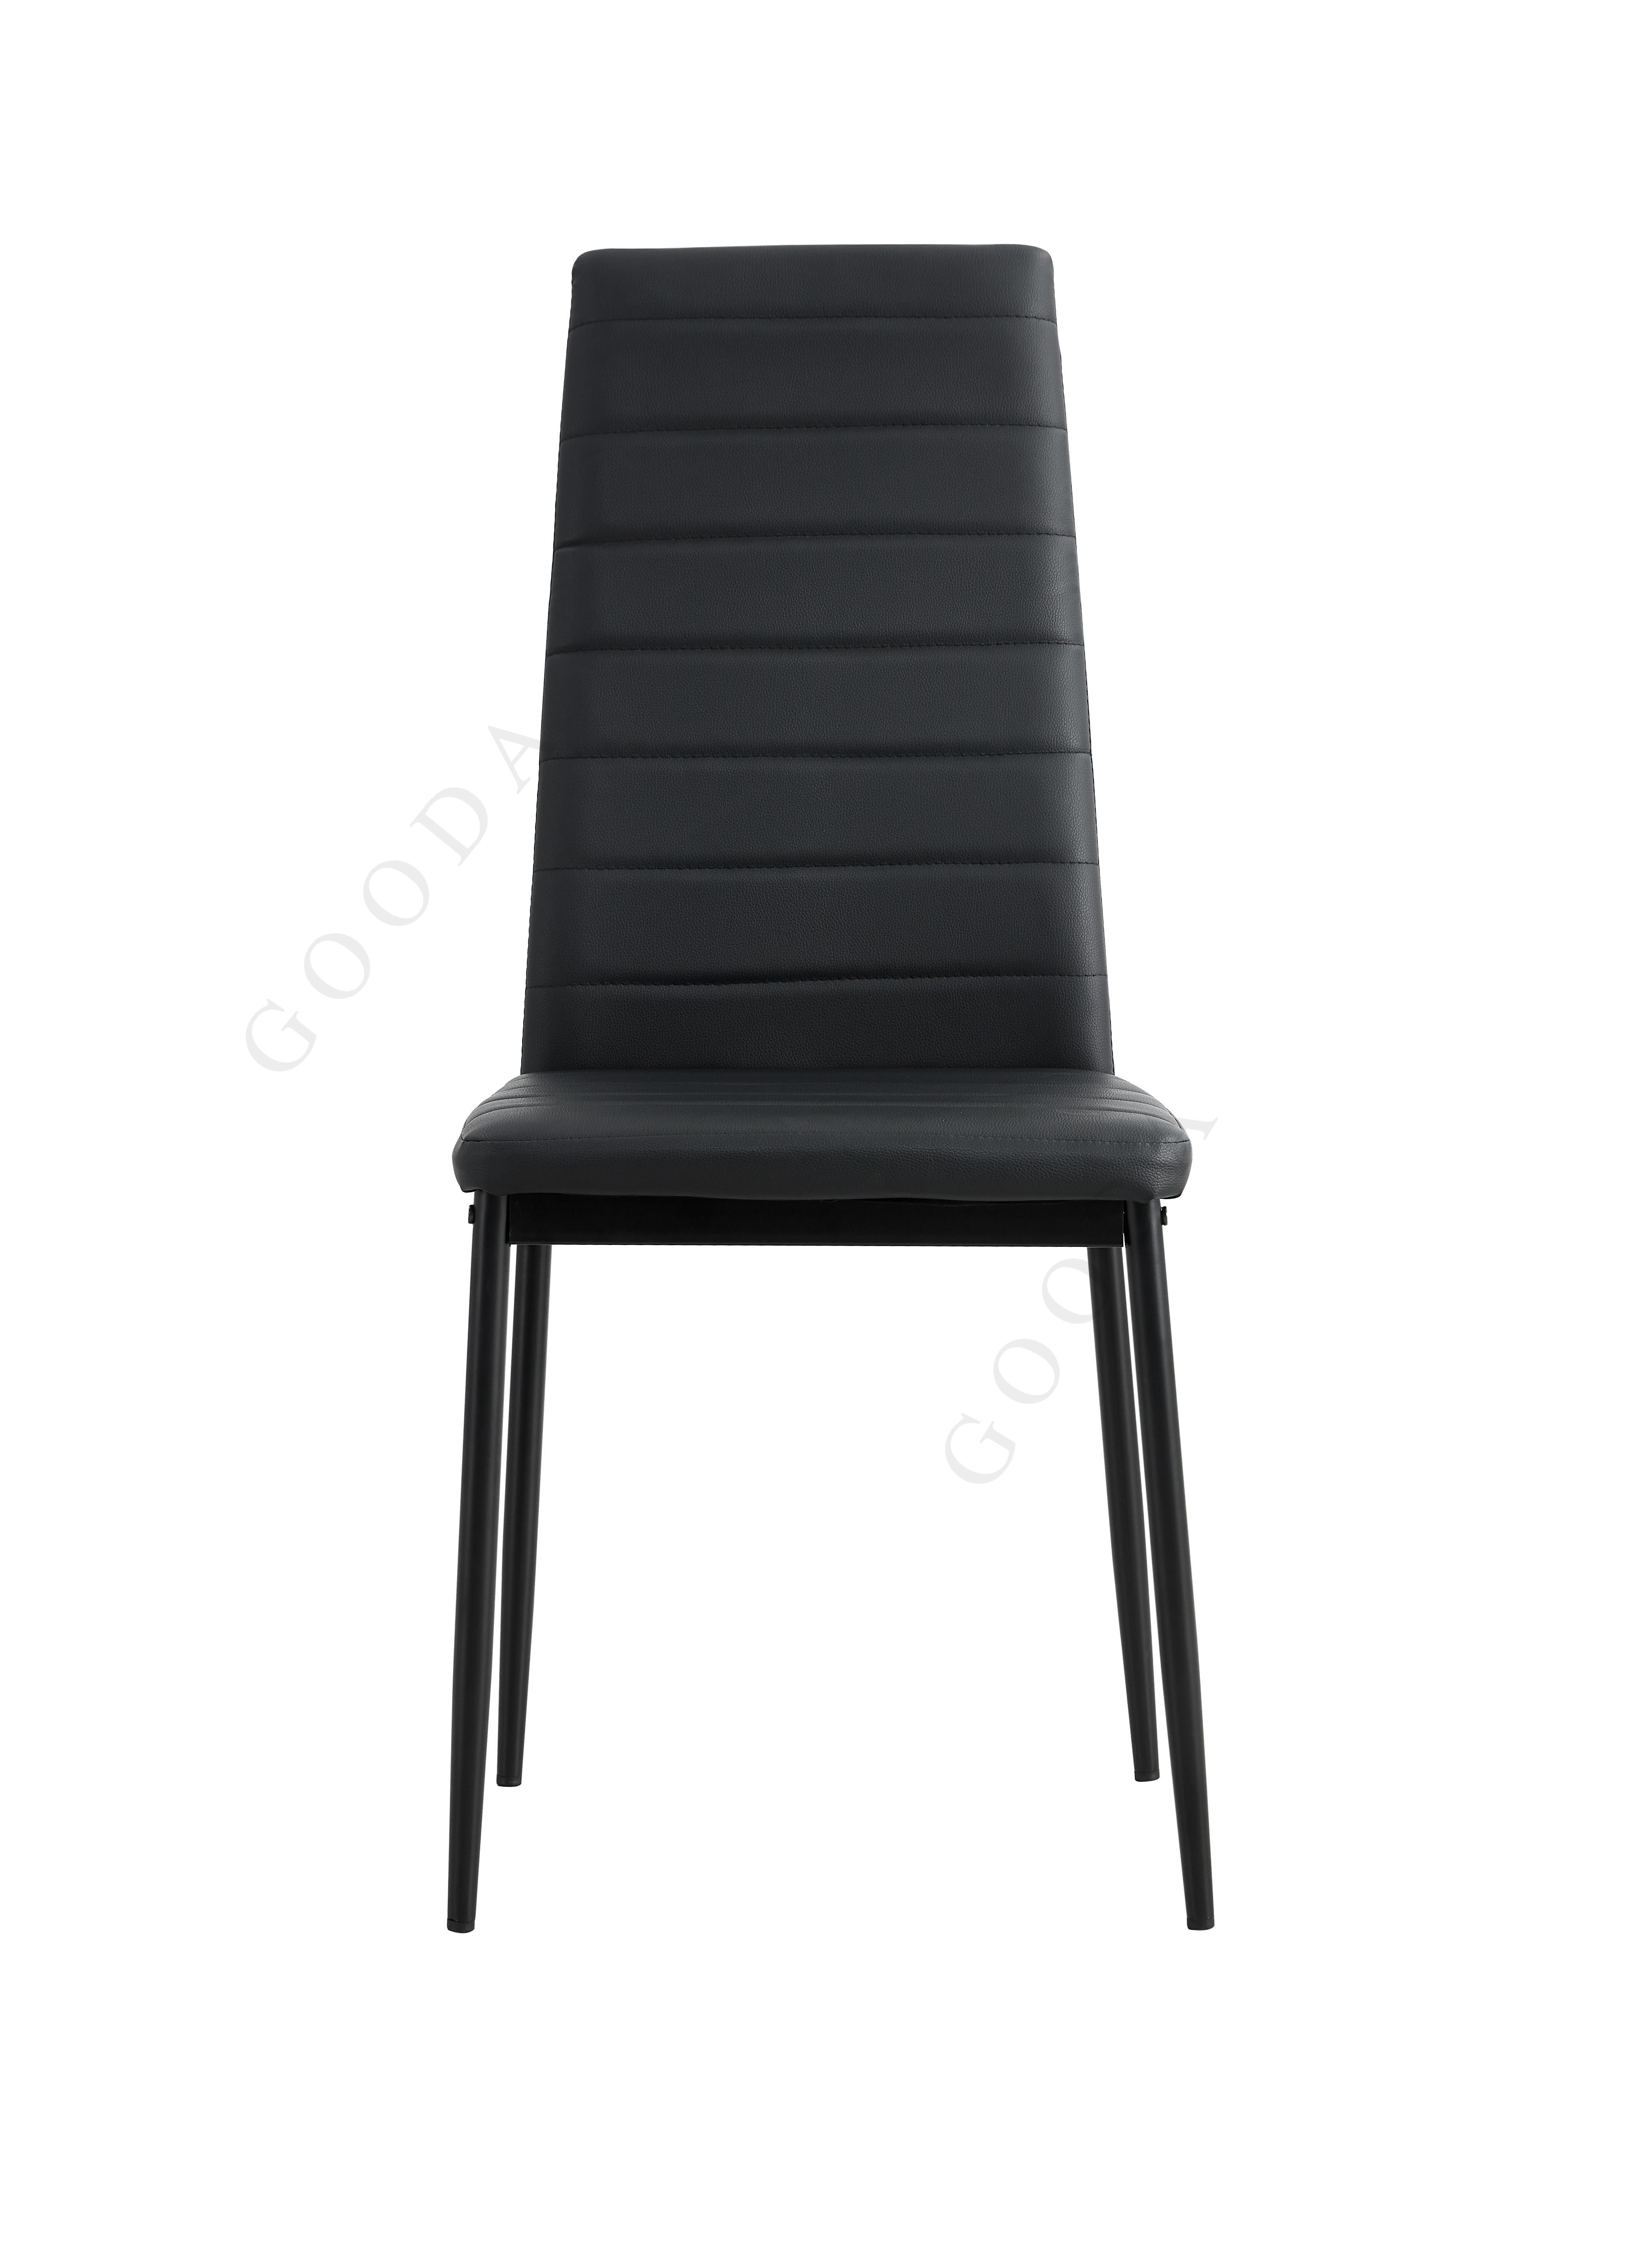 Italian Modern Black  Steel PU Dining Chairs C-830